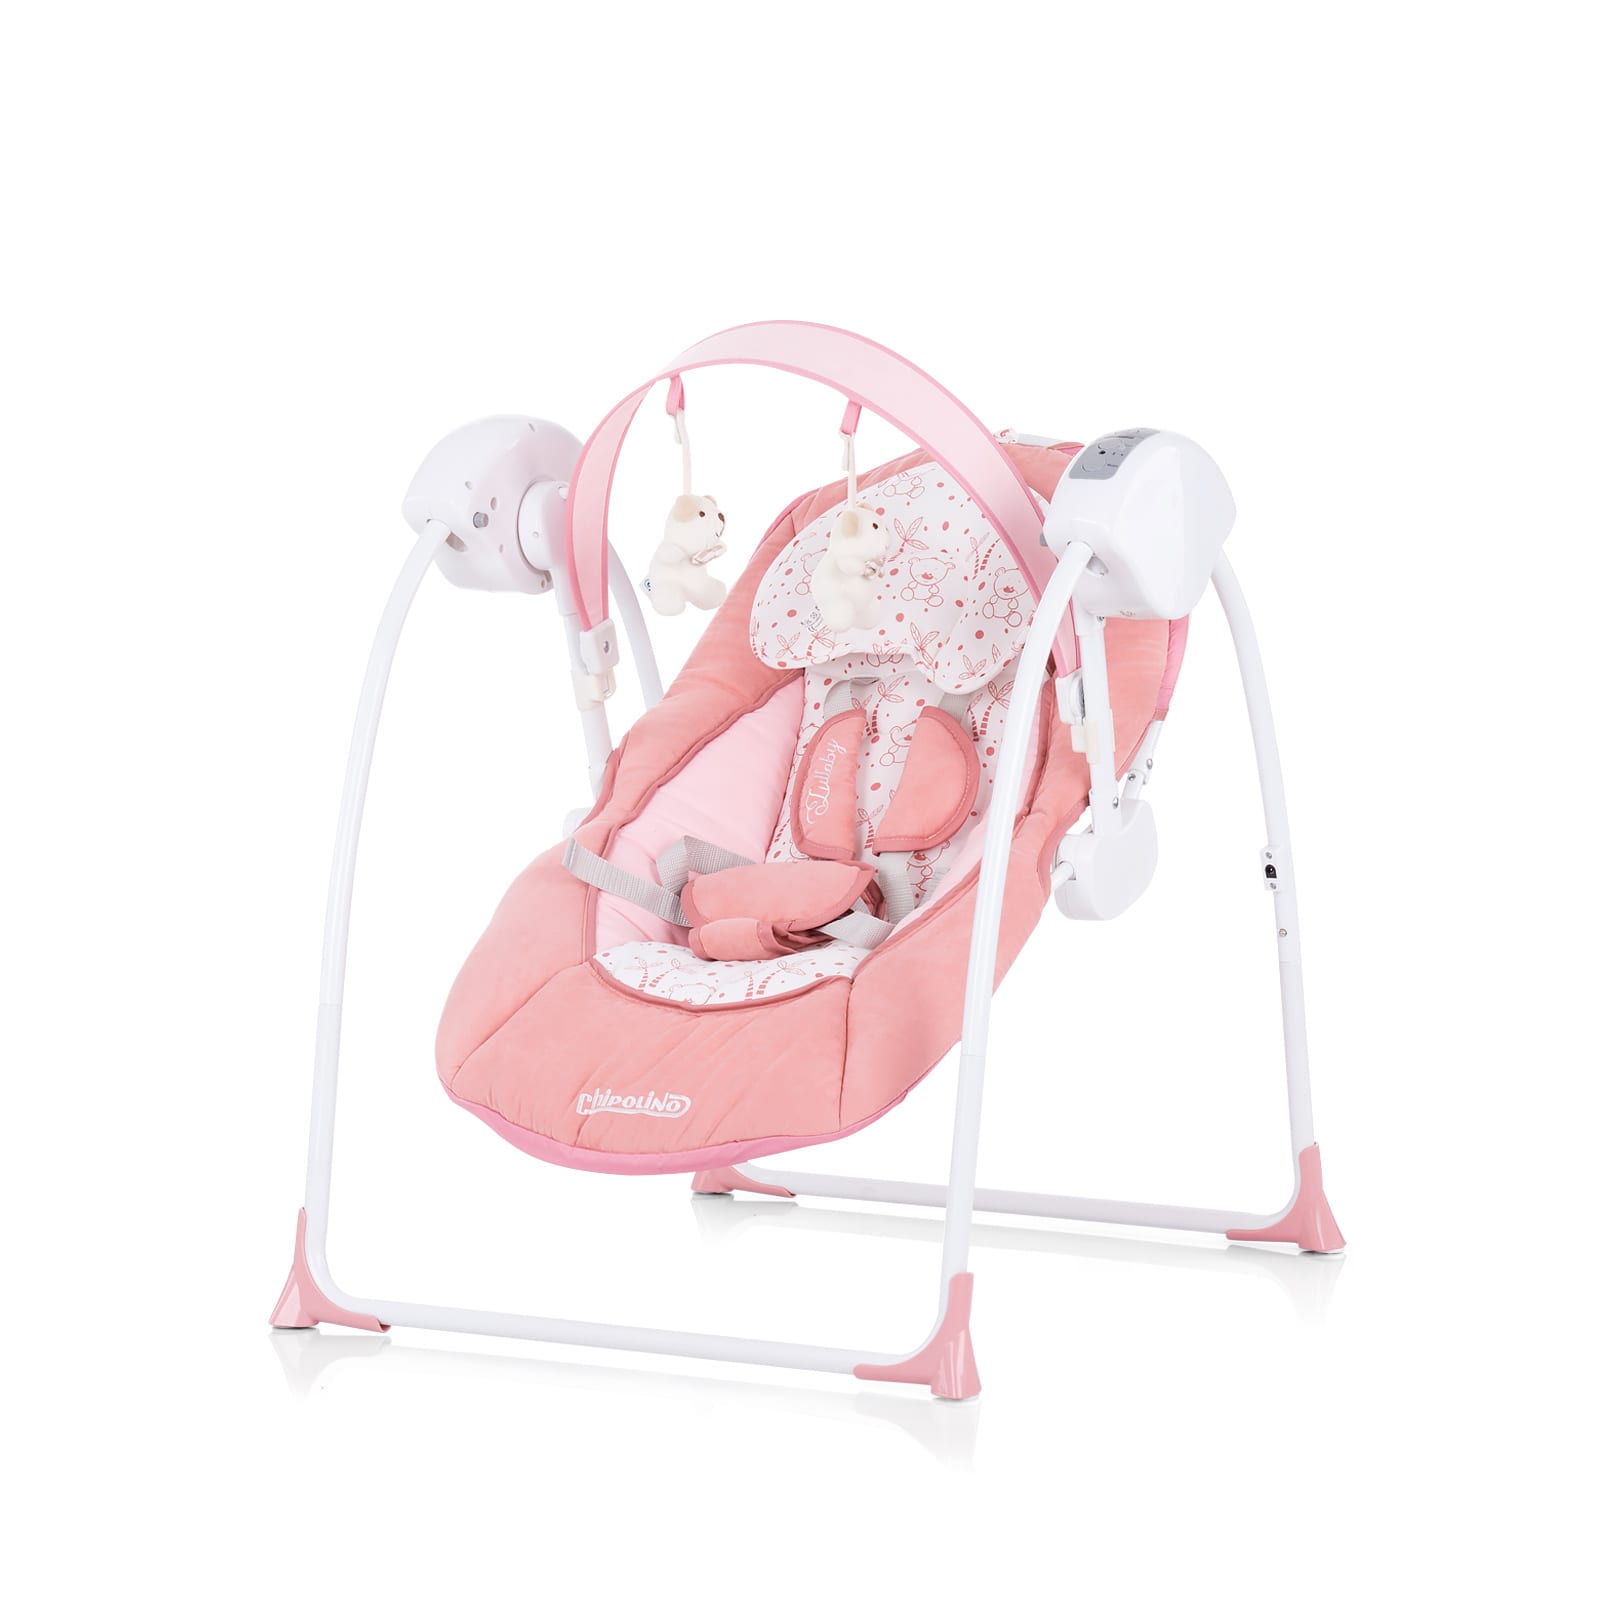 stapel Grazen hybride Elektrische babyschommel Chipolino Lullaby oud roze, schommelstoel met  bluetooth | Sevils